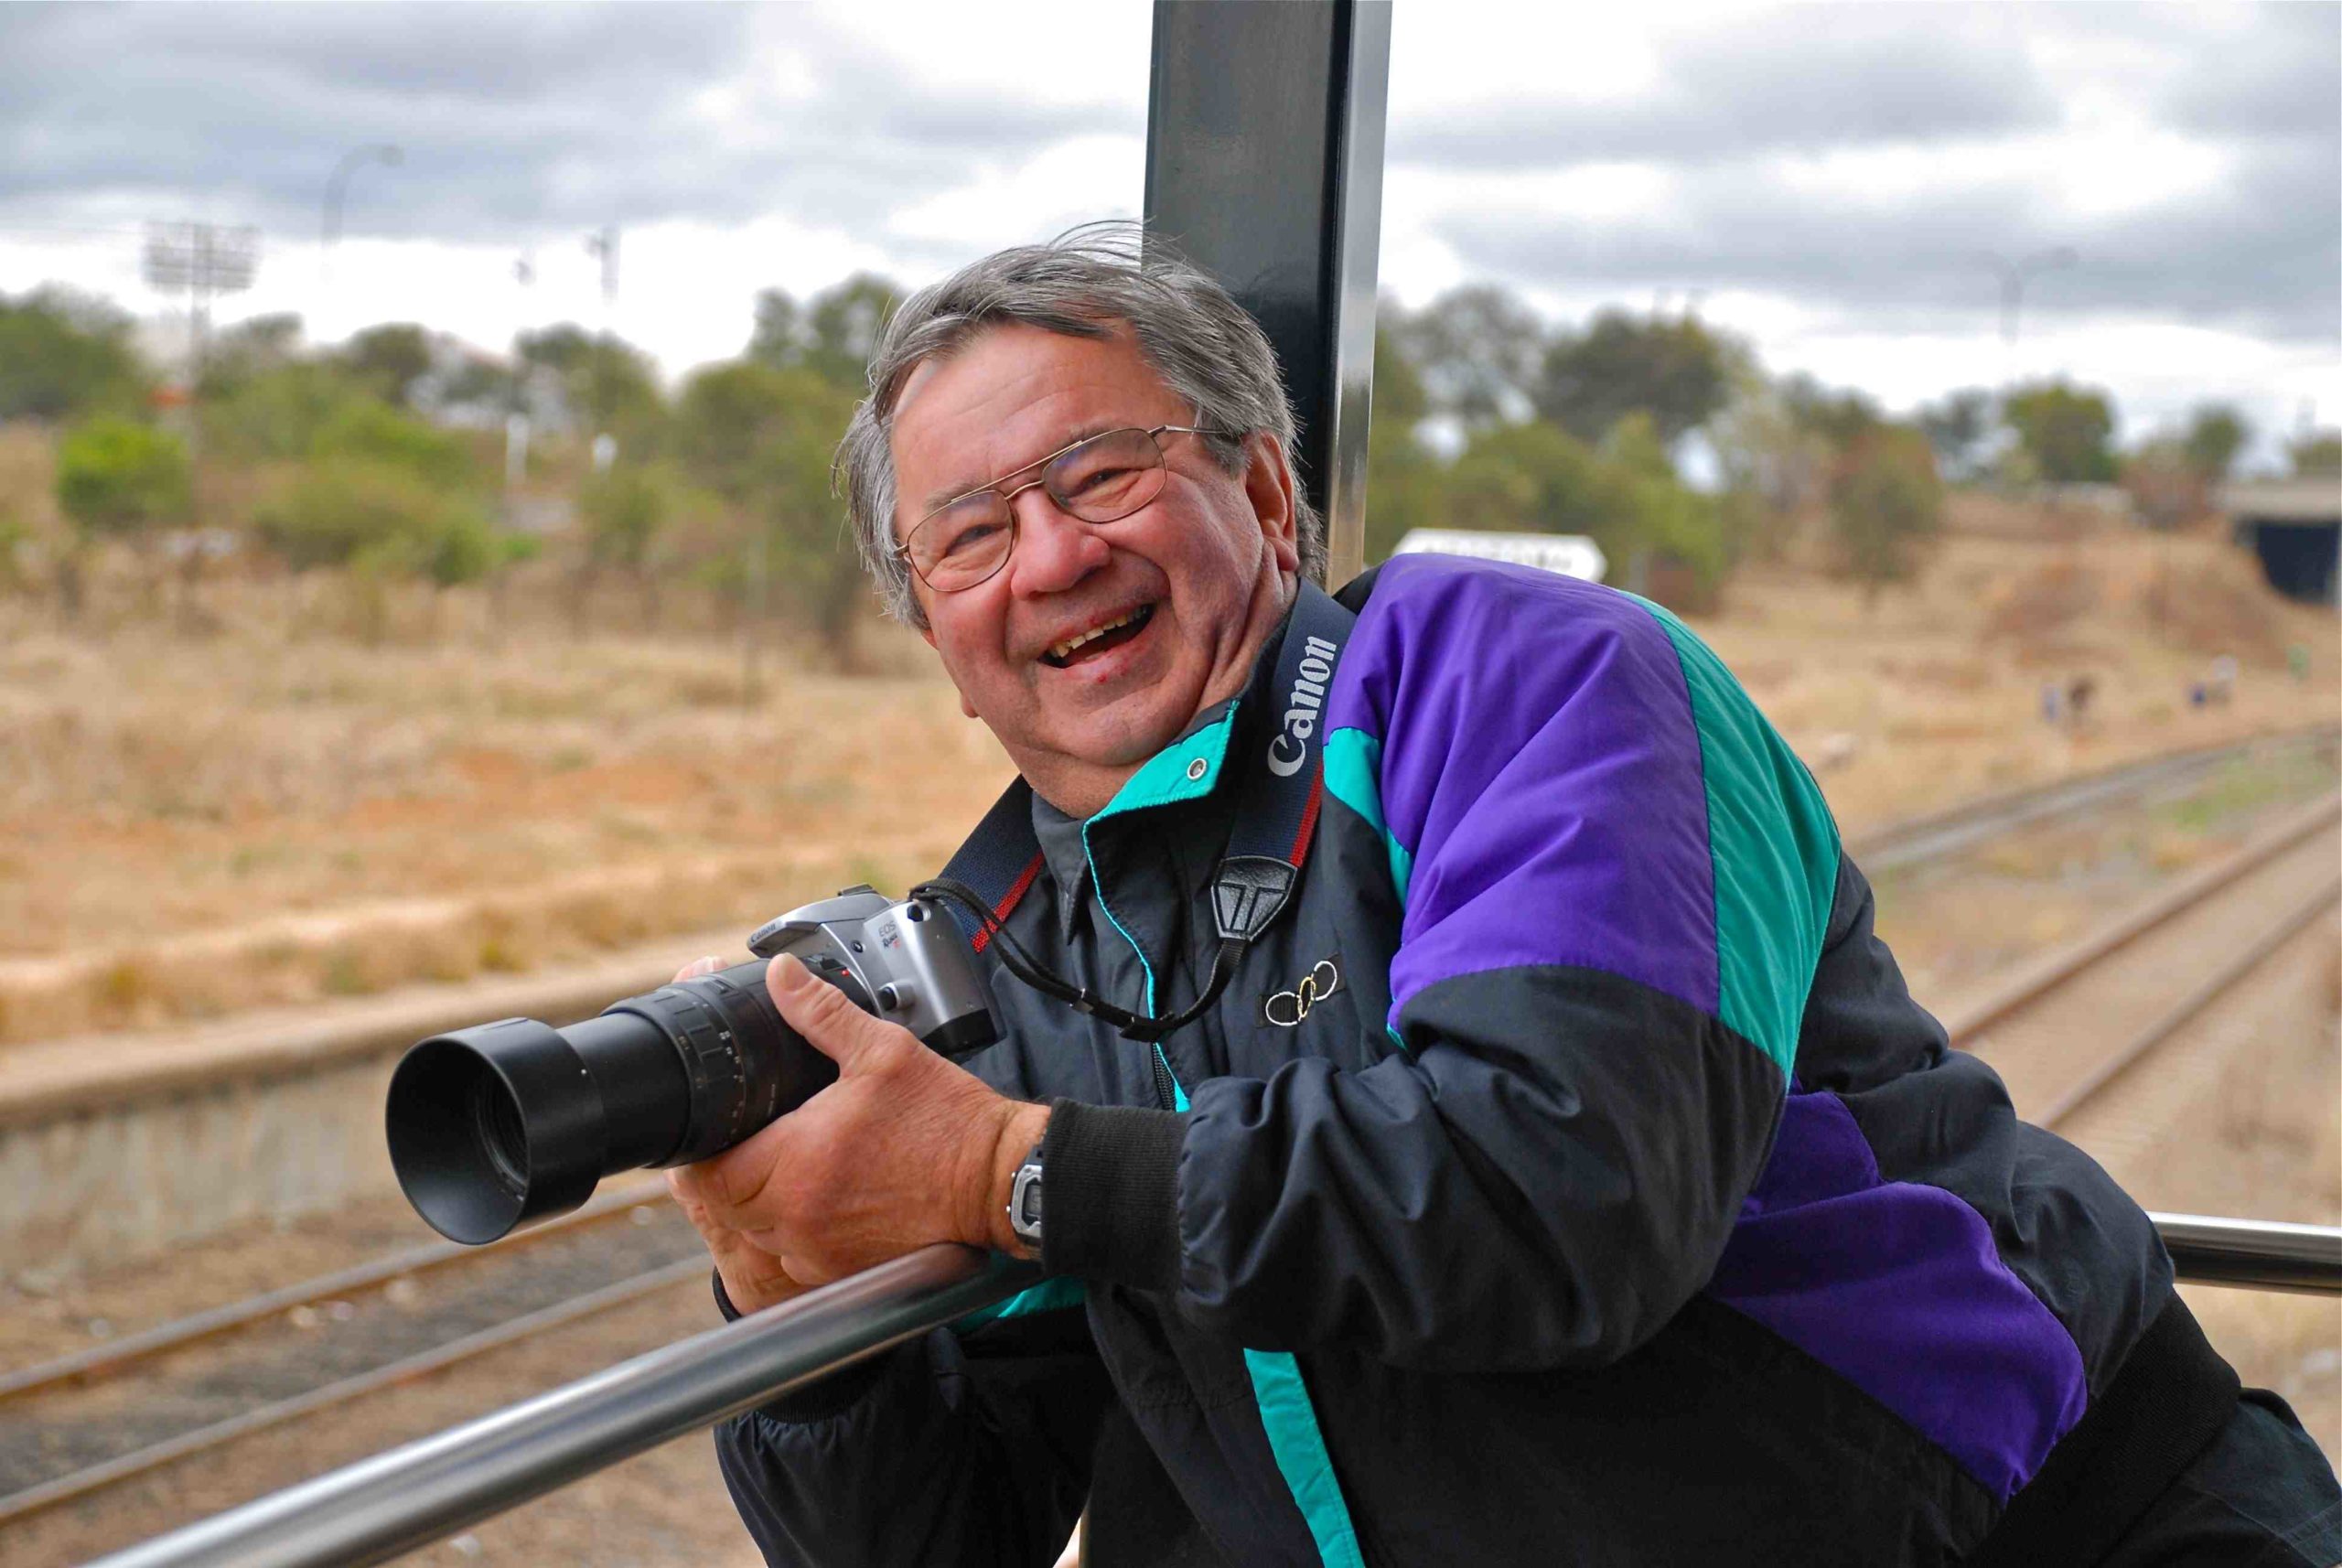 IRT Traveler Gary Ellman on 2w011 Cape-Dar tour. IRT Photo by Owen Hardy